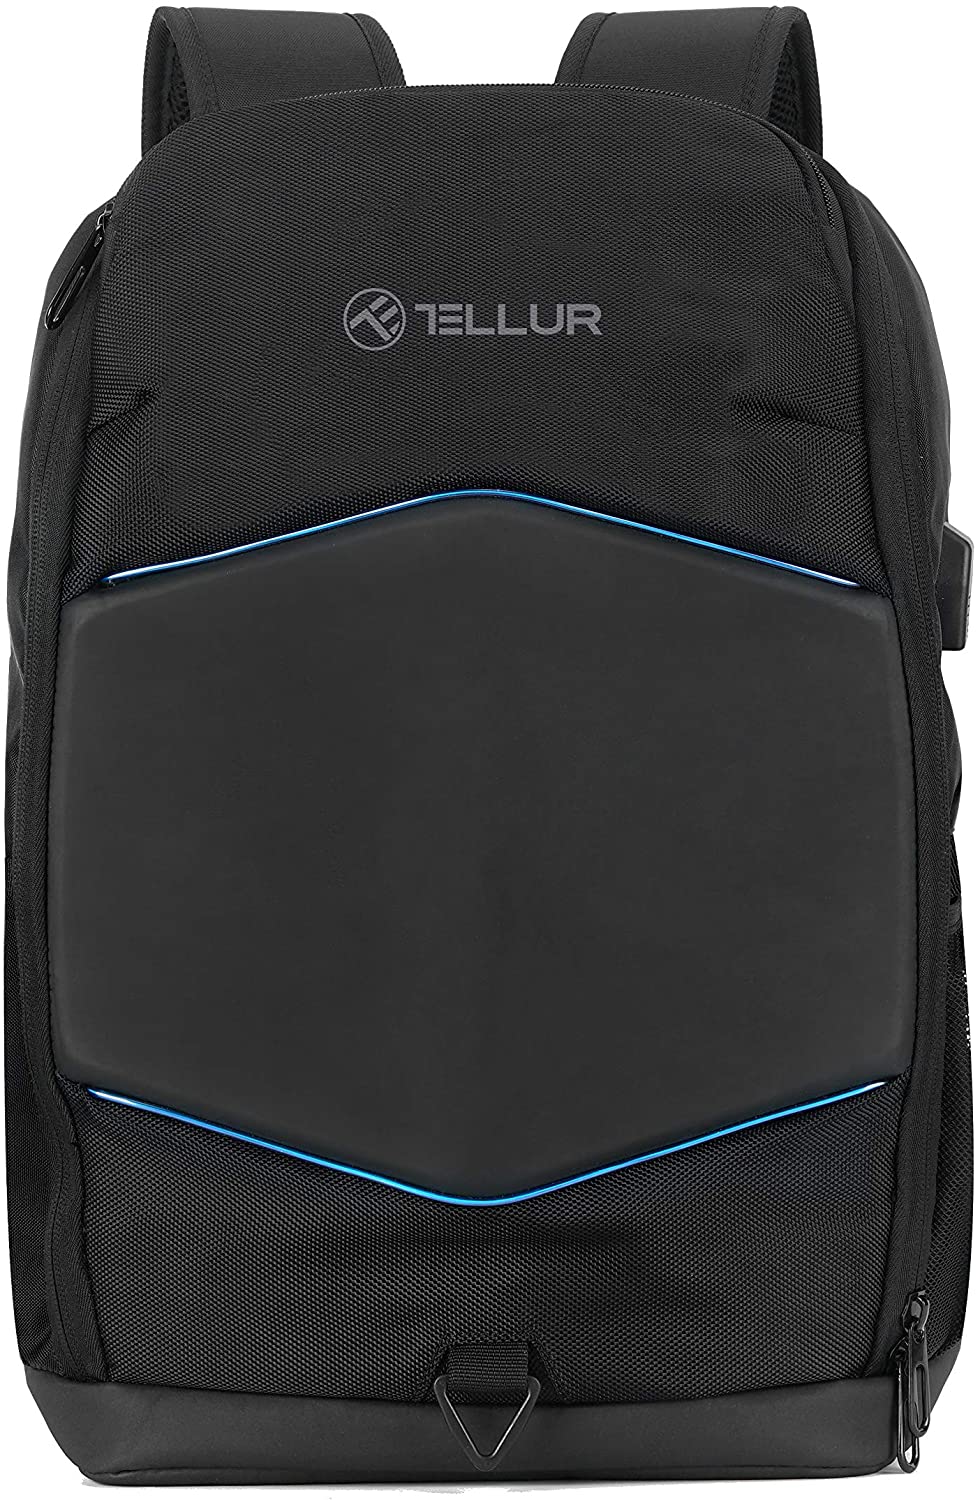 Laptop backpack Tellur with lighting, USB 15.6" black